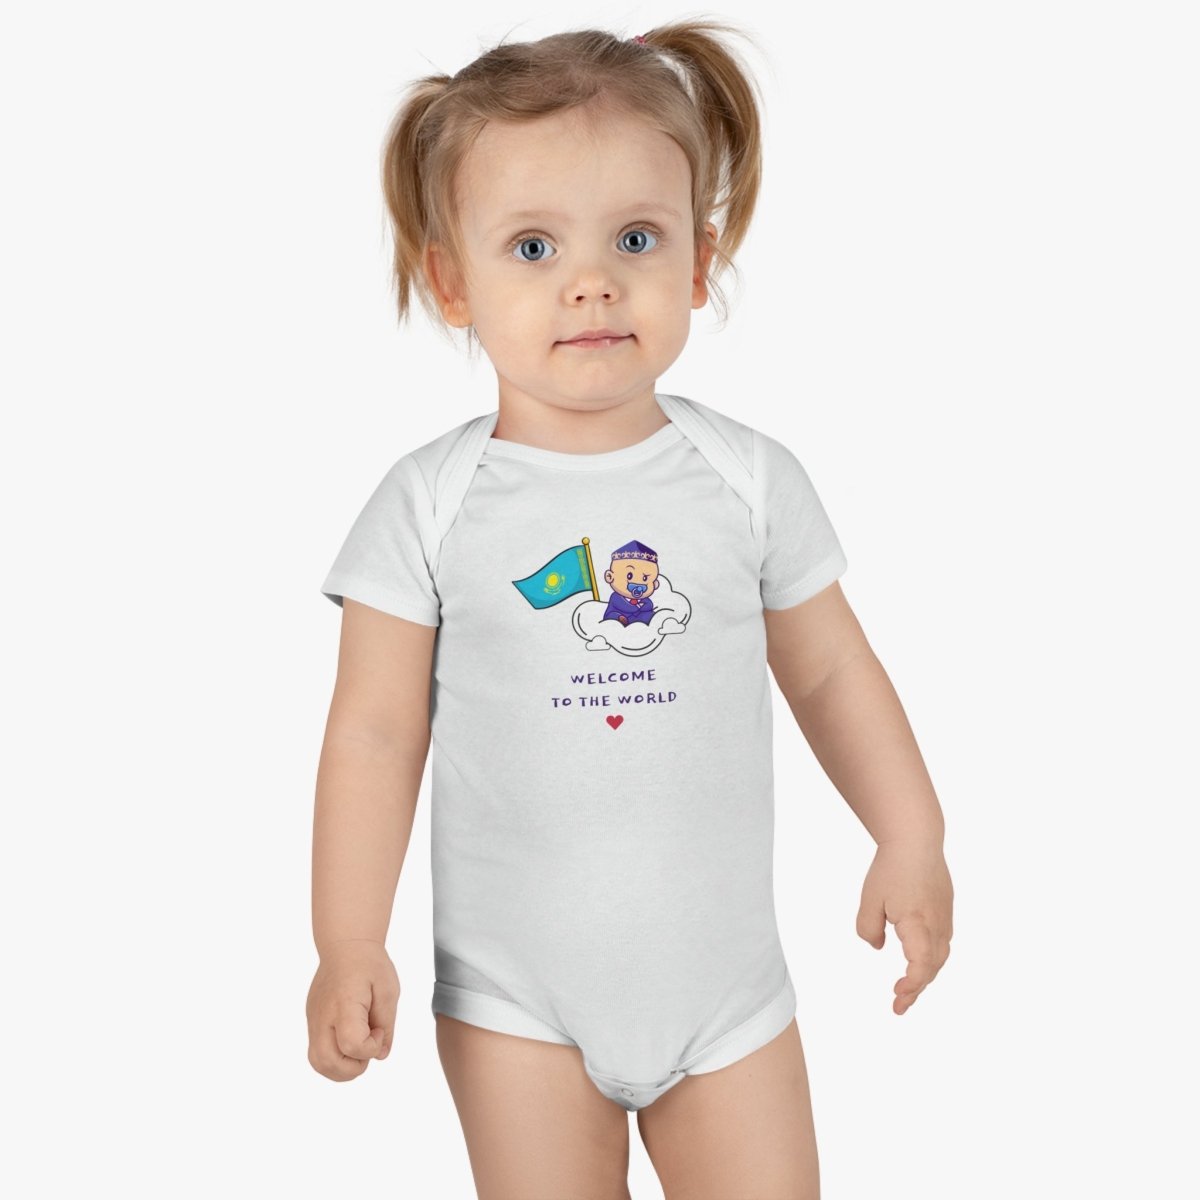 Baby Alibek Organic Bodysuit - Cultics